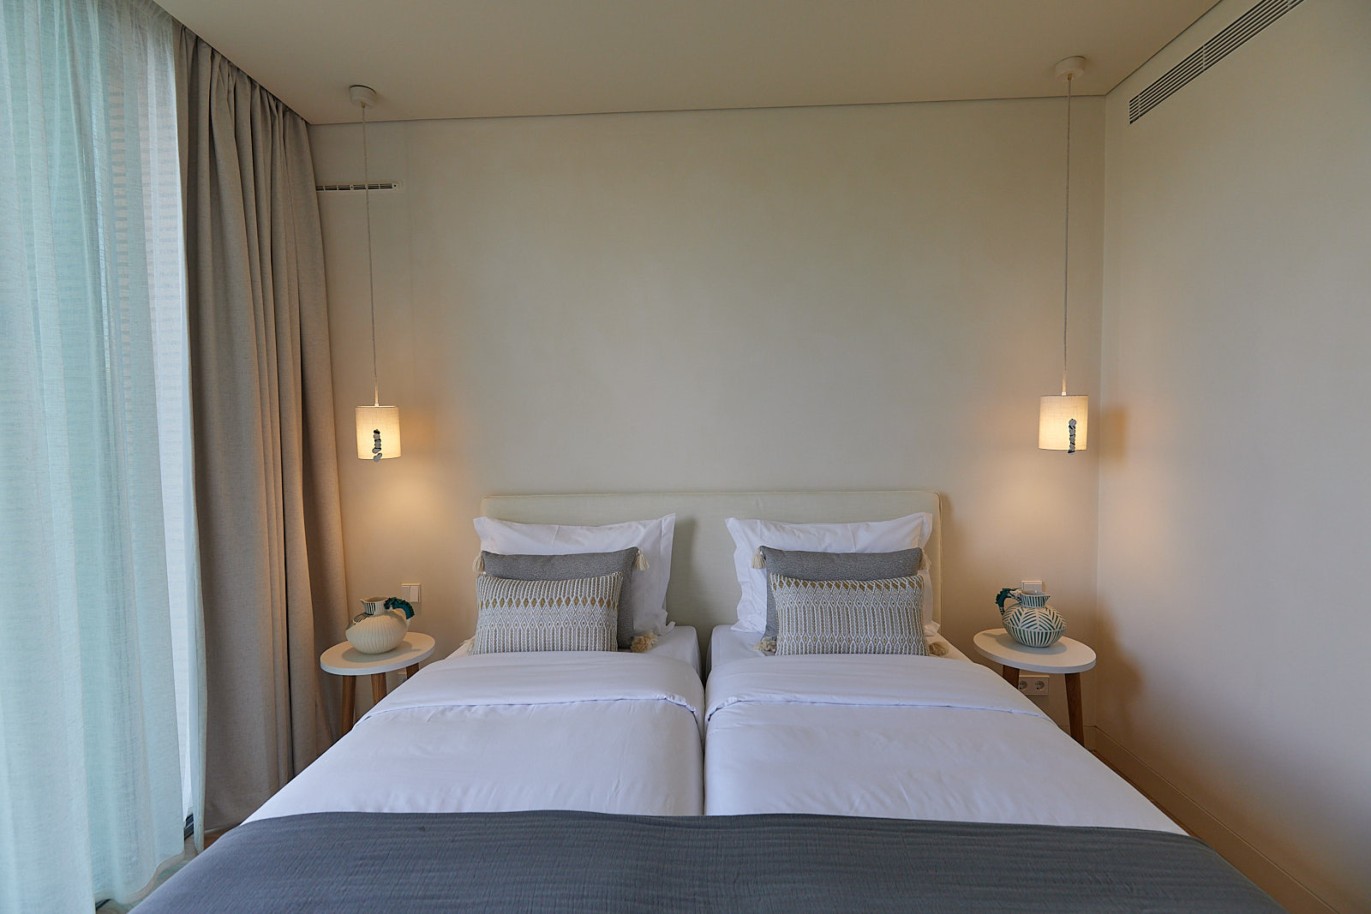 3 bedroom apartment in resort, for sale in Porches, Algarve_230737